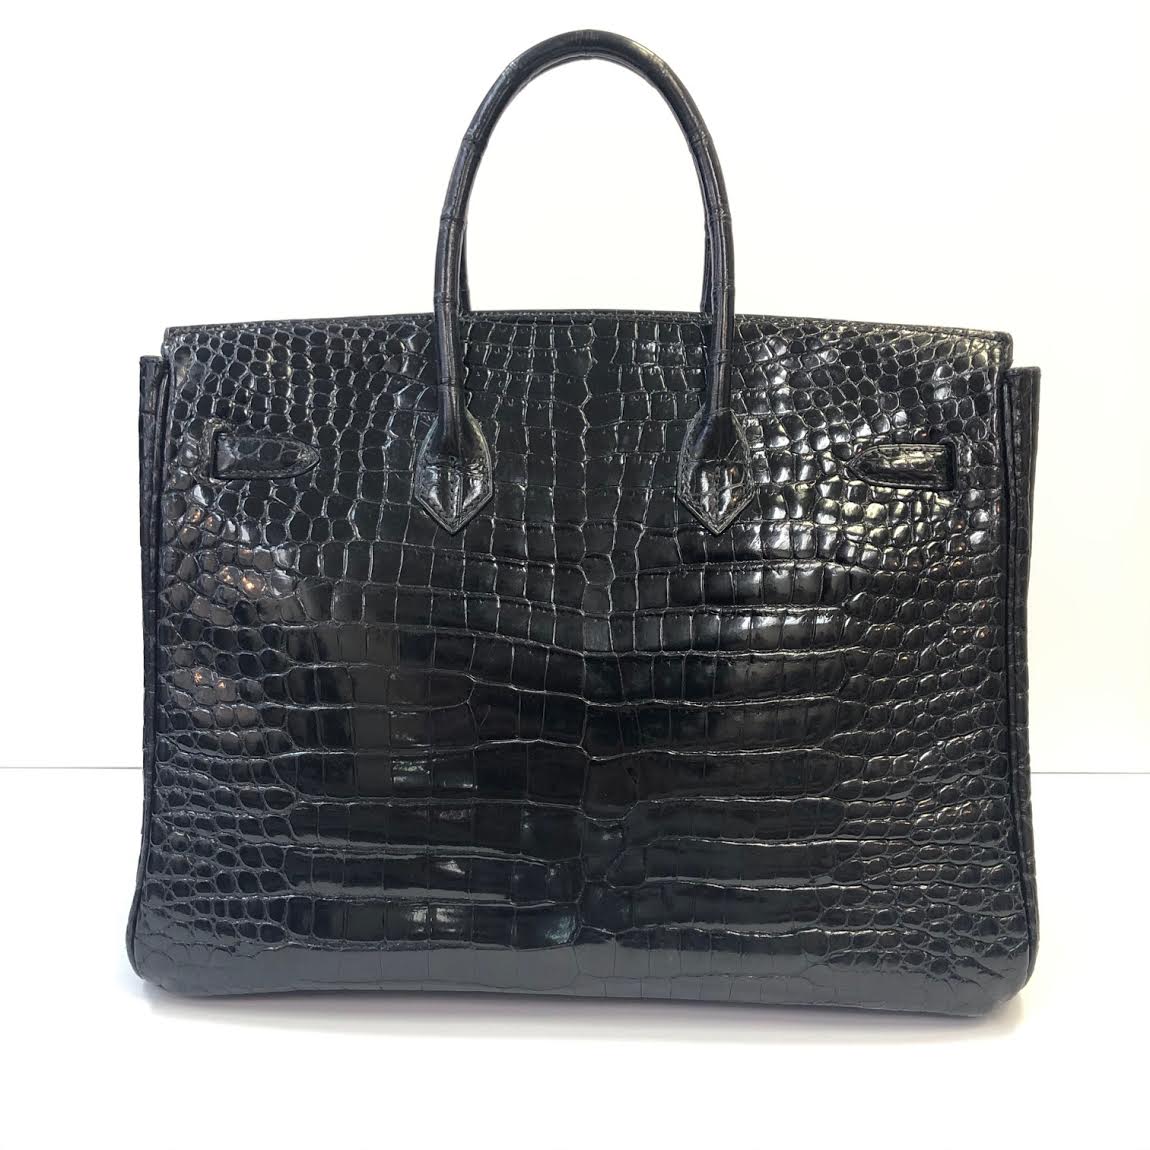 Preloved Hermès Birkin 35 Black and Feu Shiny Porosus Croc with